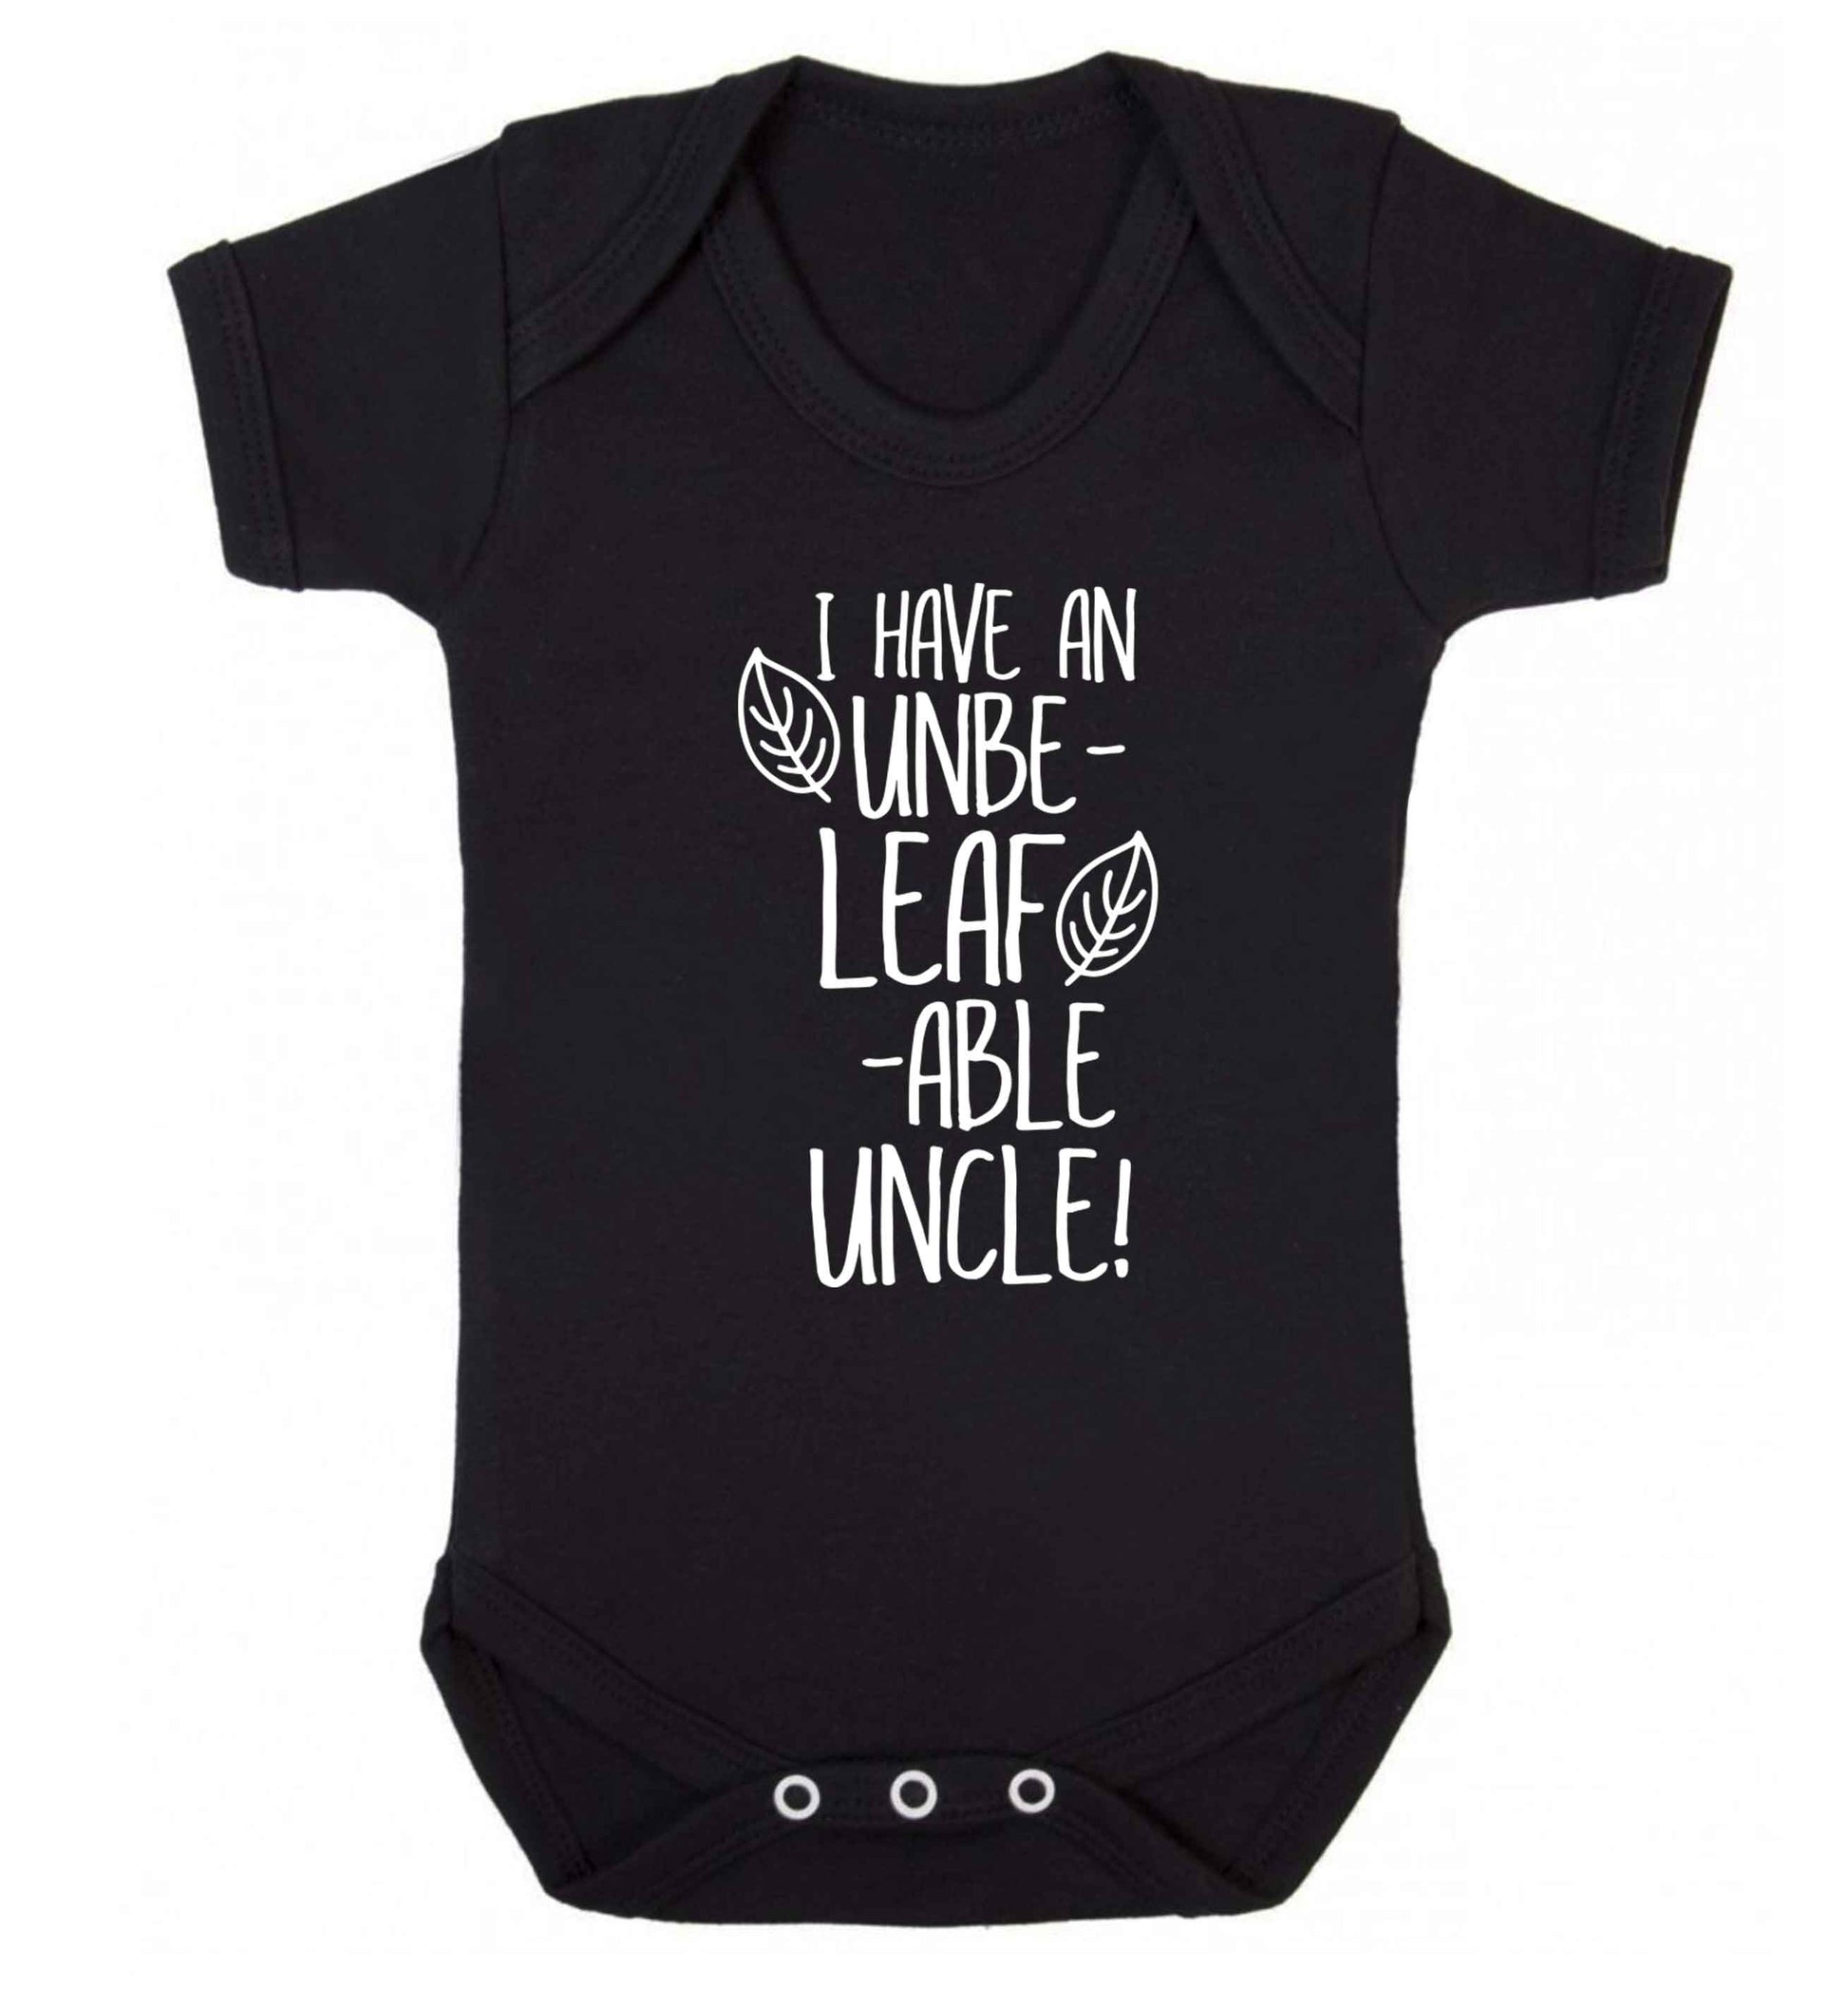 I have an unbe-leaf-able uncle Baby Vest black 18-24 months